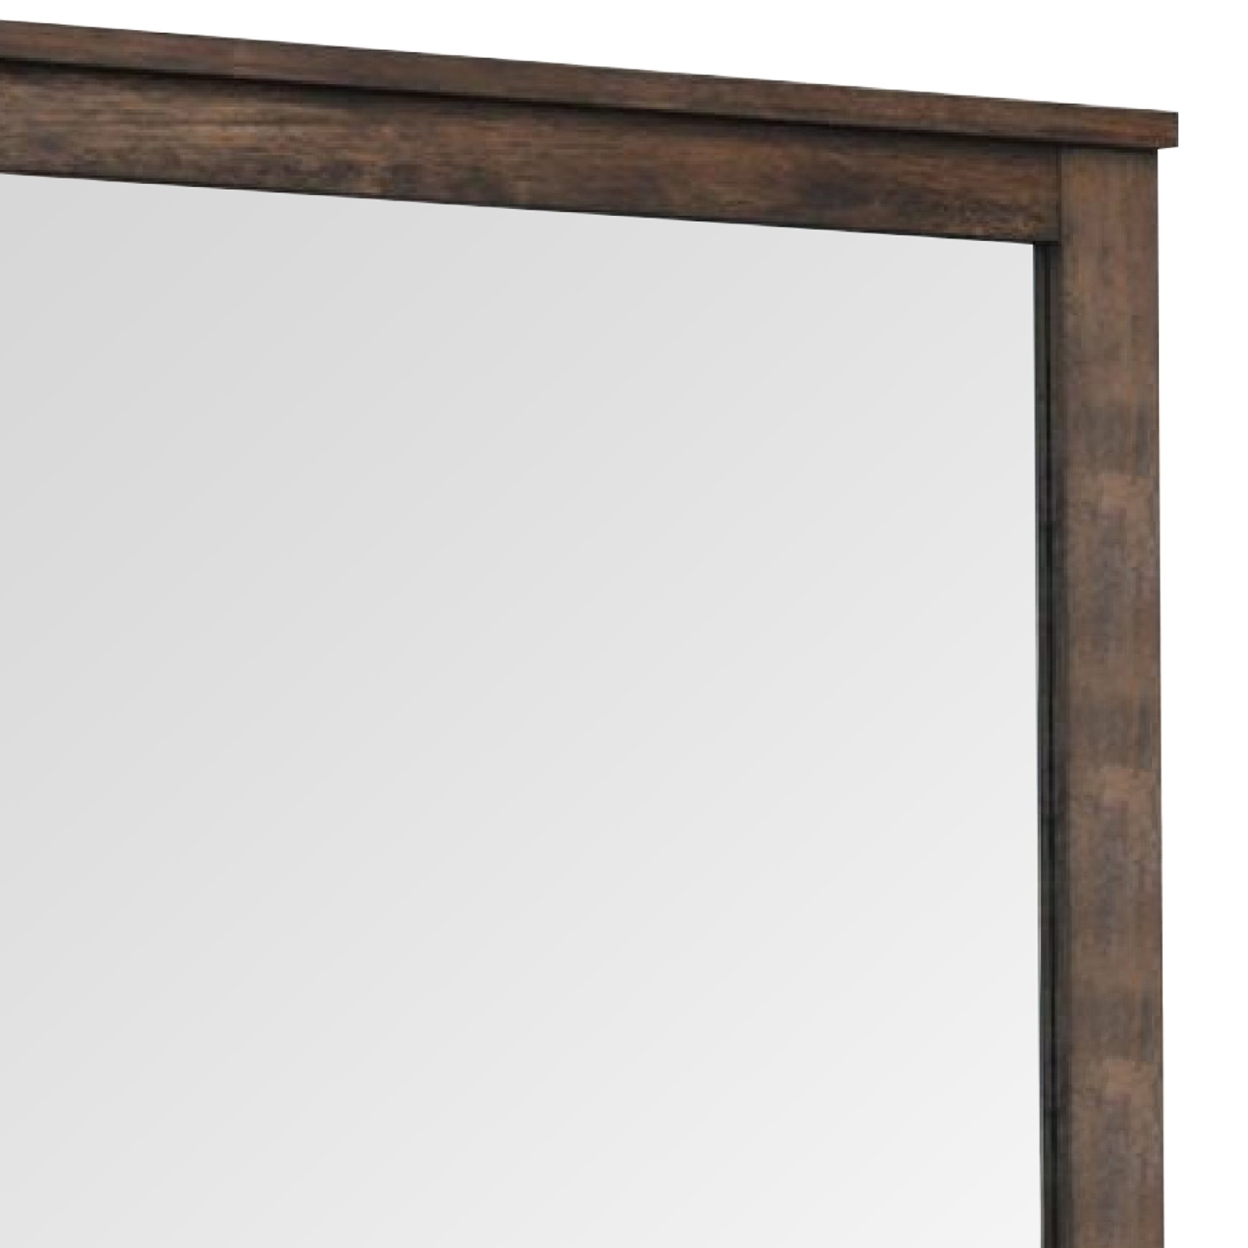 41 Inch Wood Portrait Mirror, Beveled Trim Top, Wood Grain, Oak Brown- Saltoro Sherpi